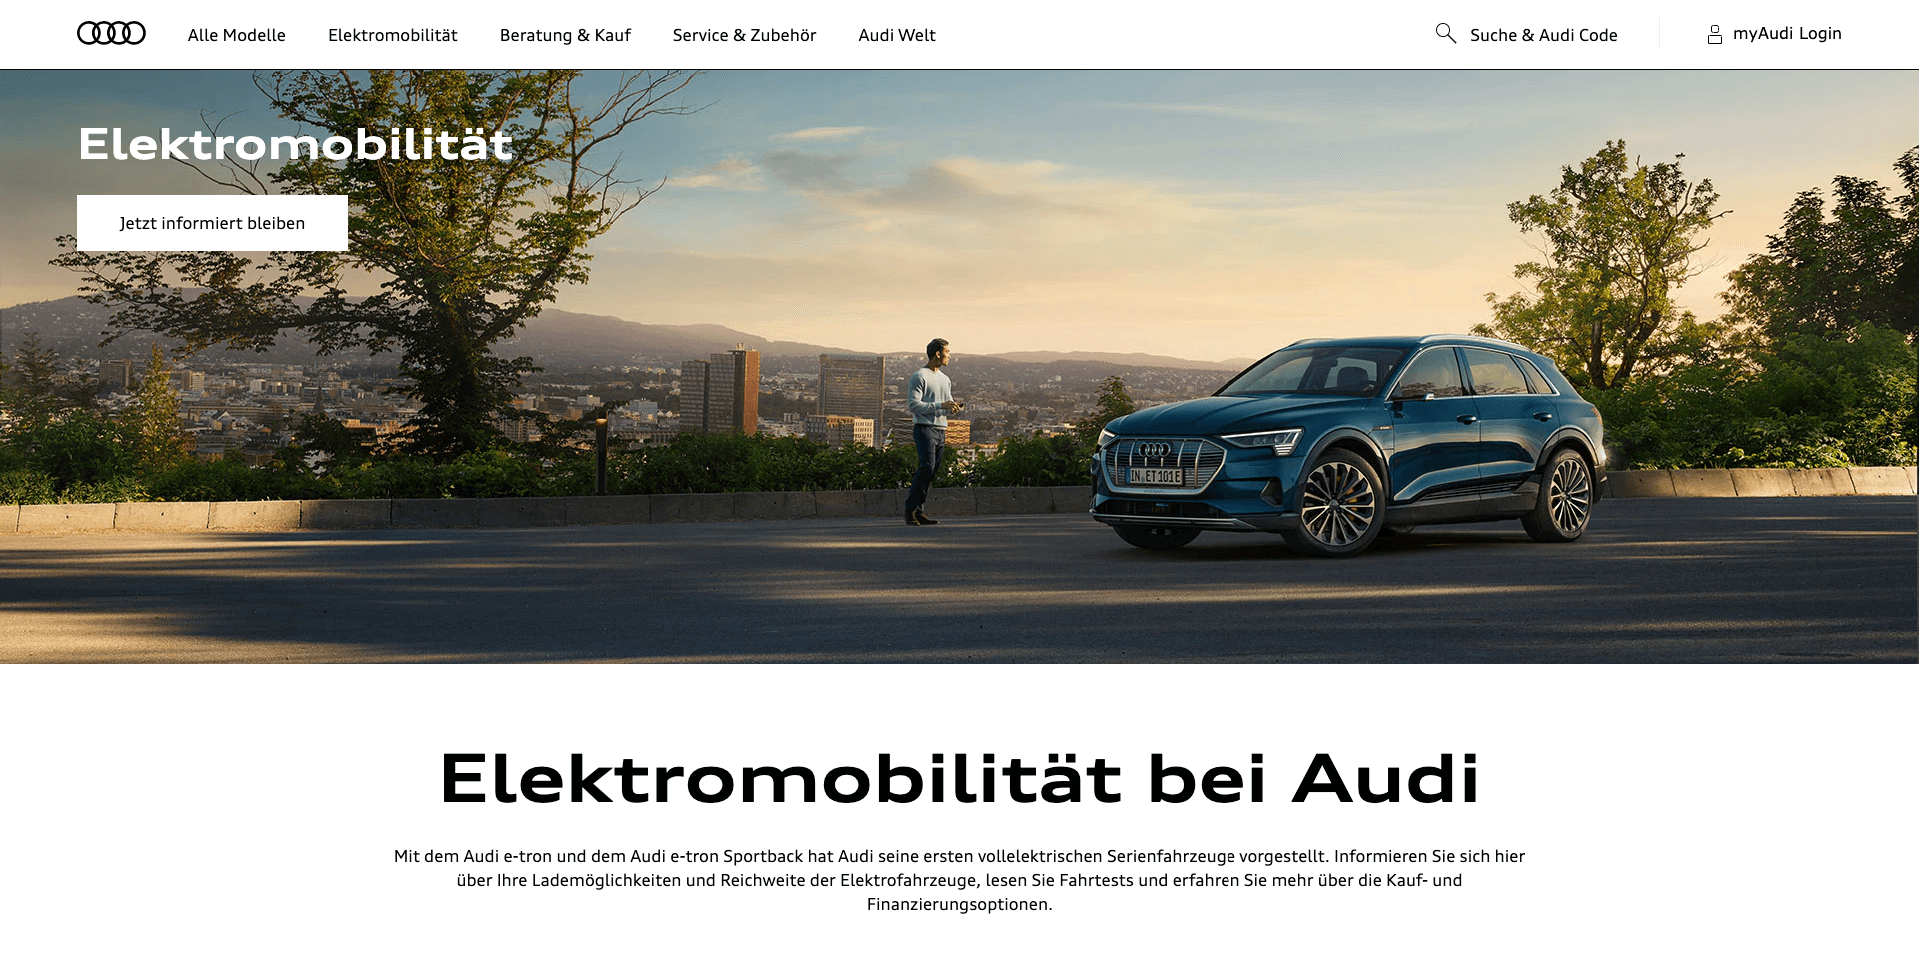 Audi Elektromobilität